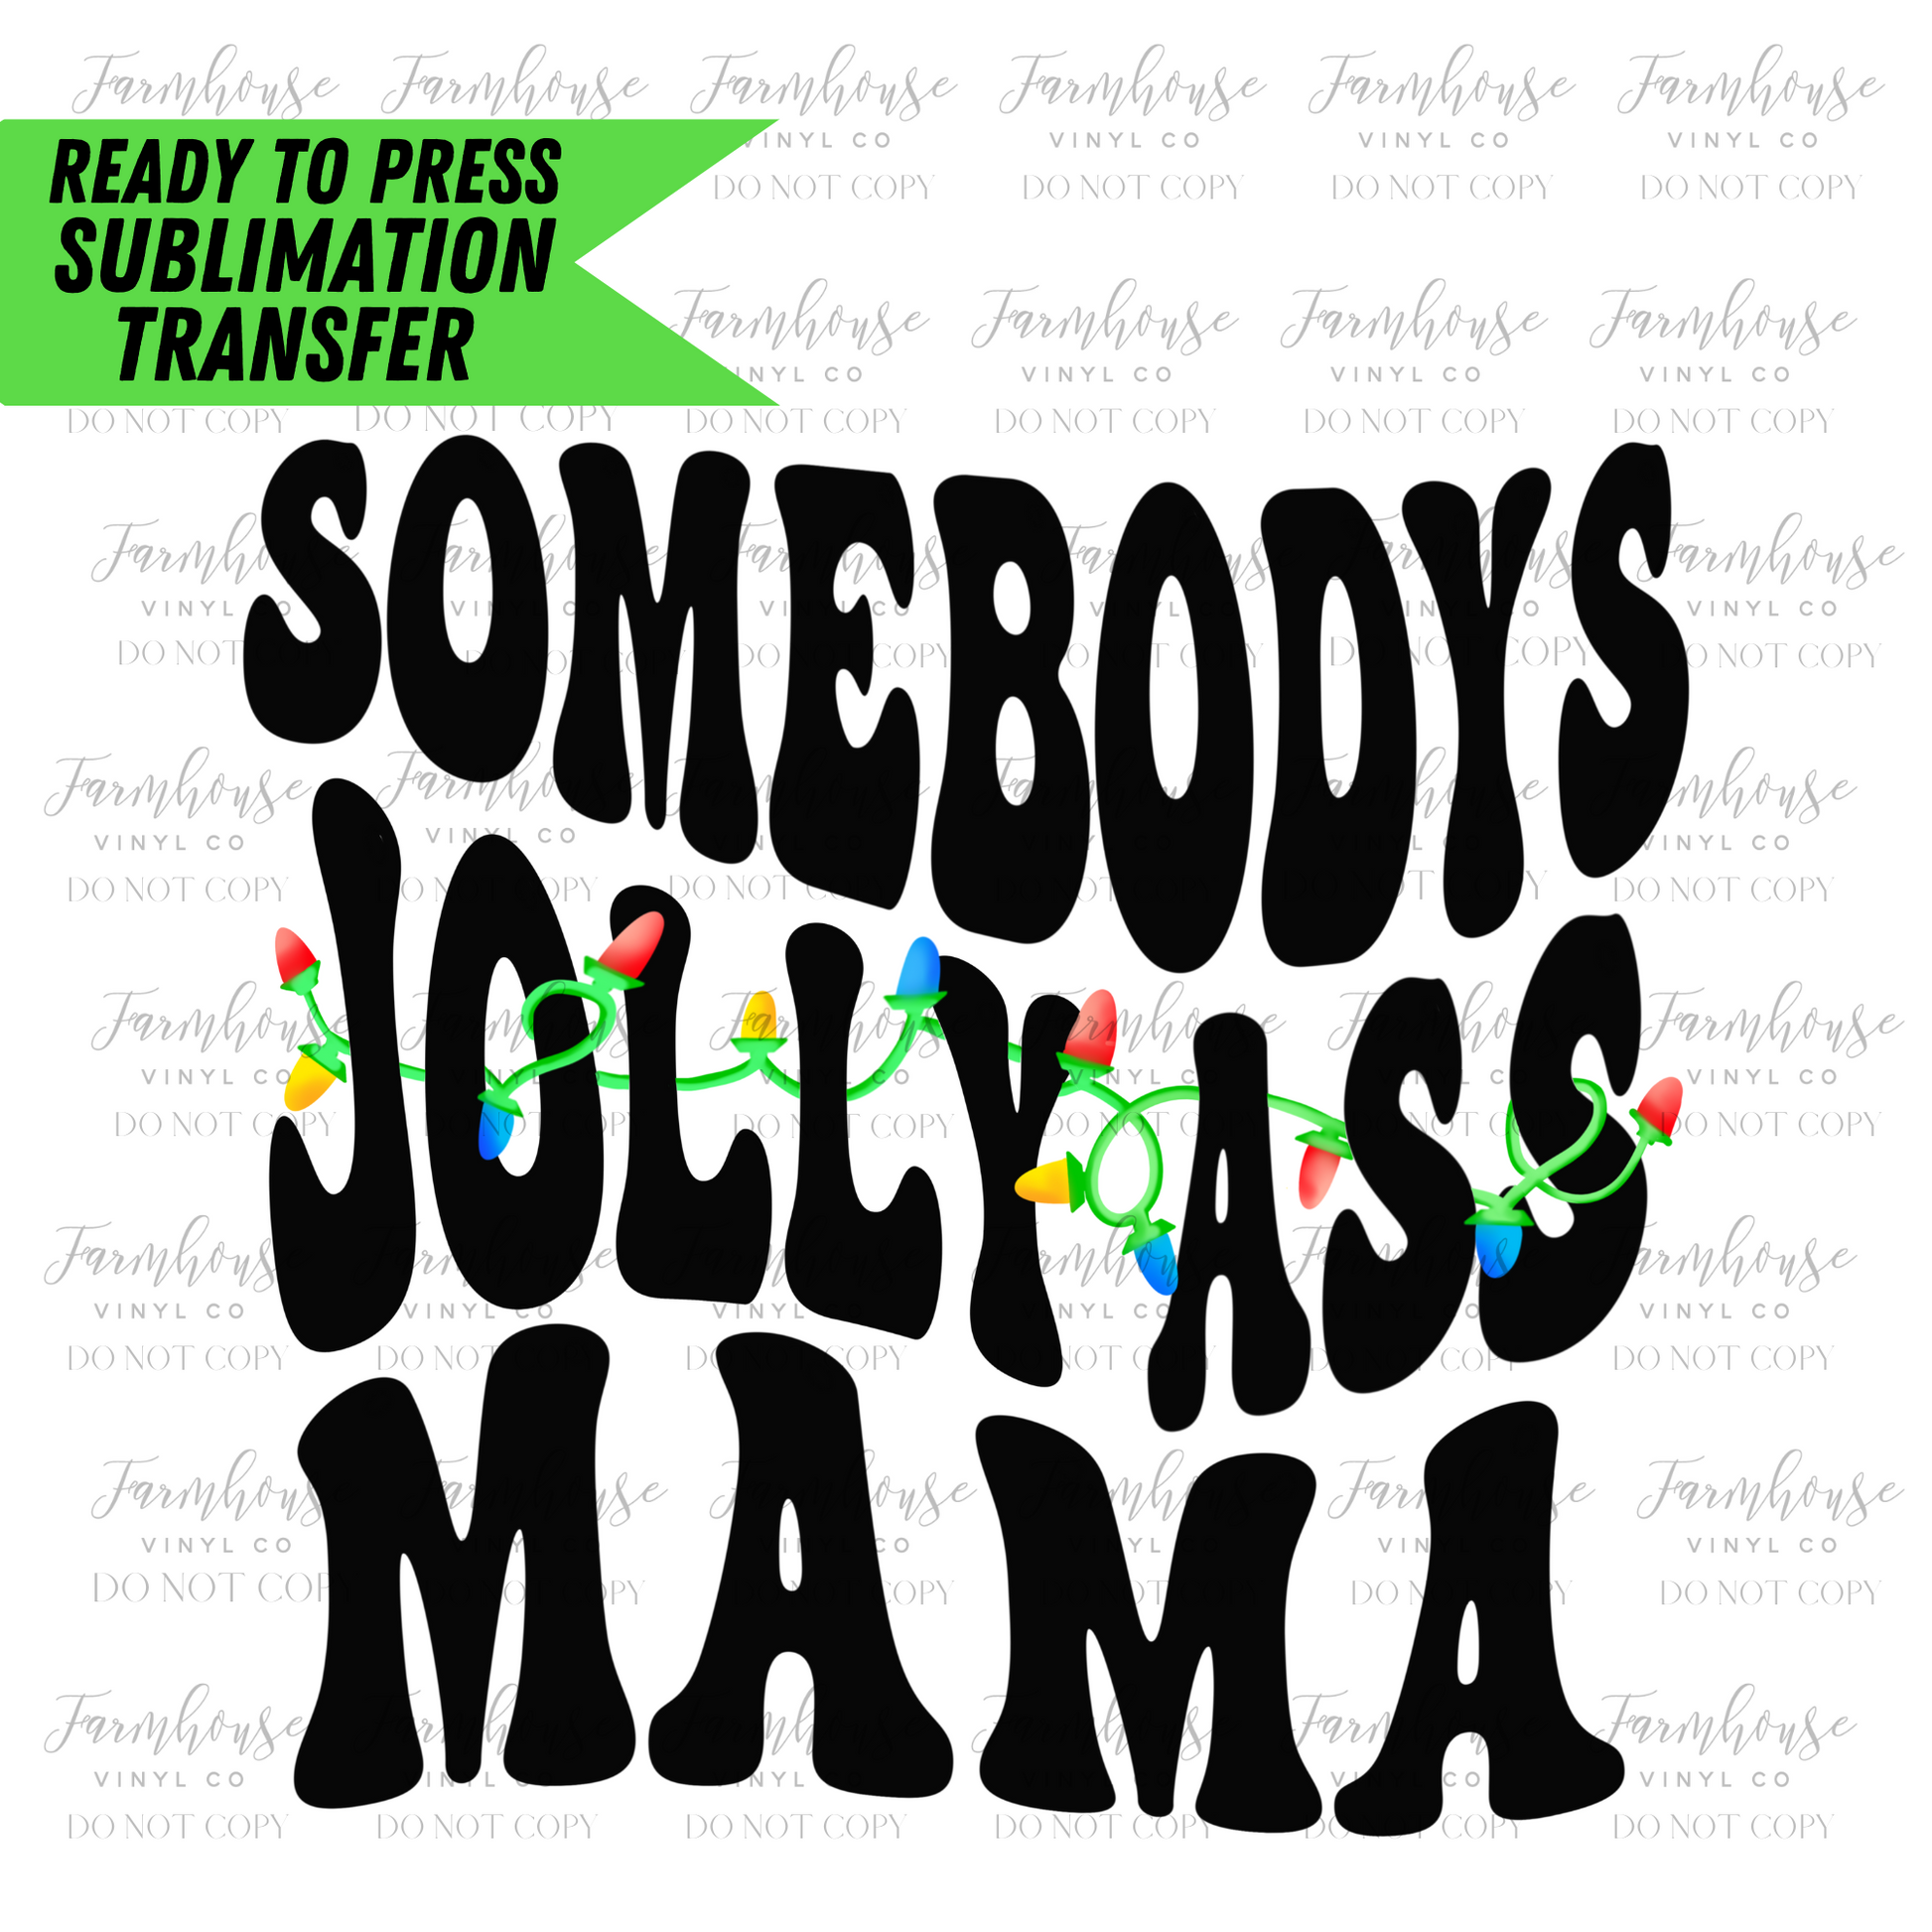 Somebodys Jolly Ass Mama Ready To Press Sublimation Transfer Design - Farmhouse Vinyl Co